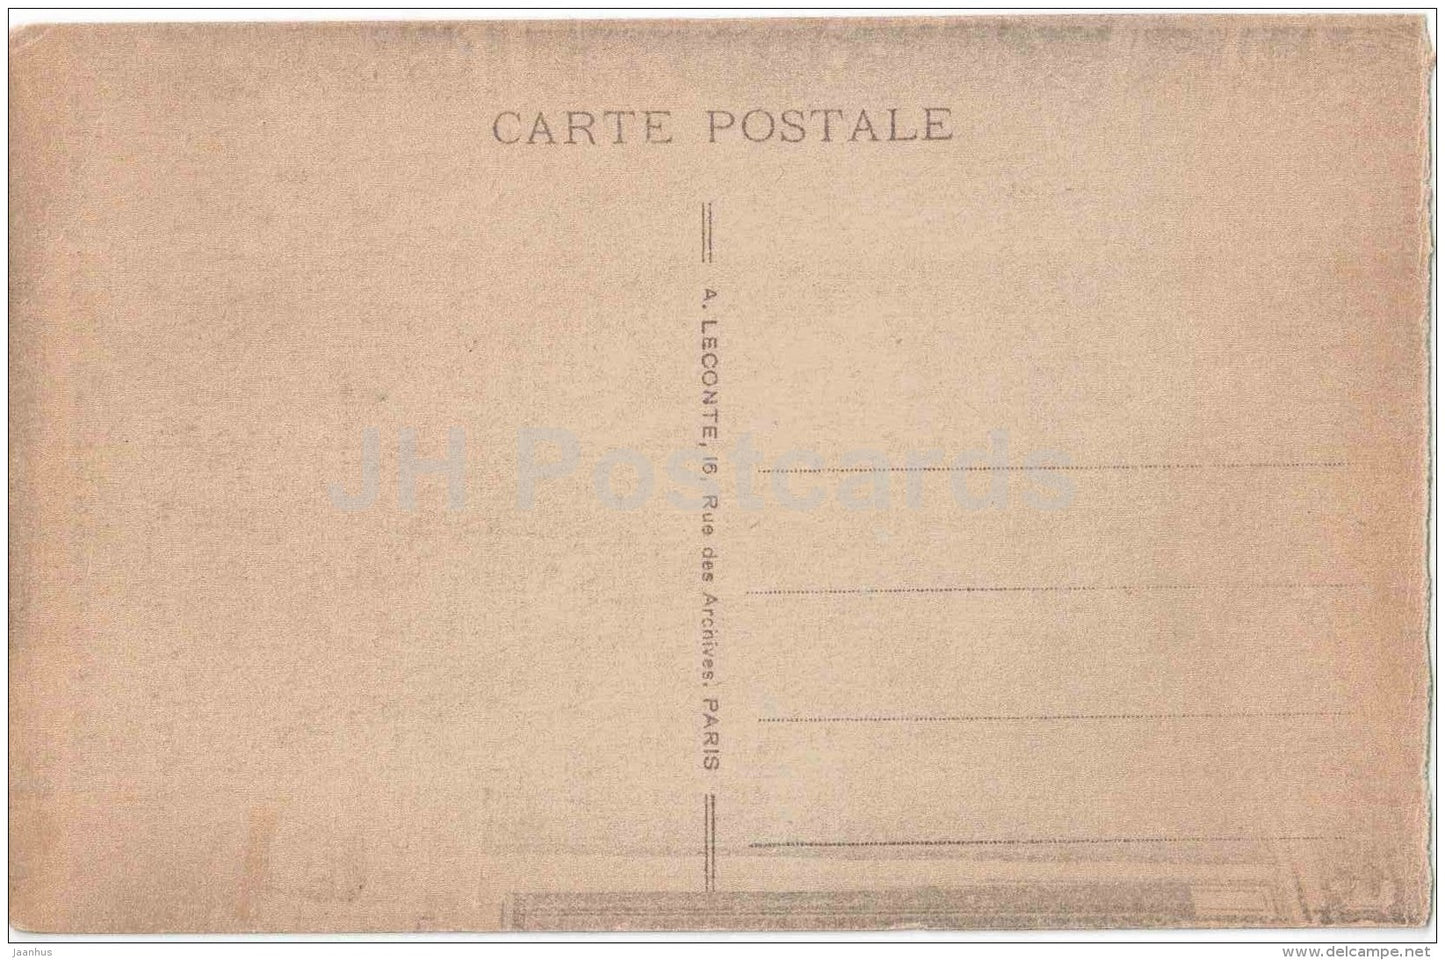 Palace - Table de la Signature de la Paix - Table used for signing of Peace Treaty - 103 - Versailles - France - unused - JH Postcards